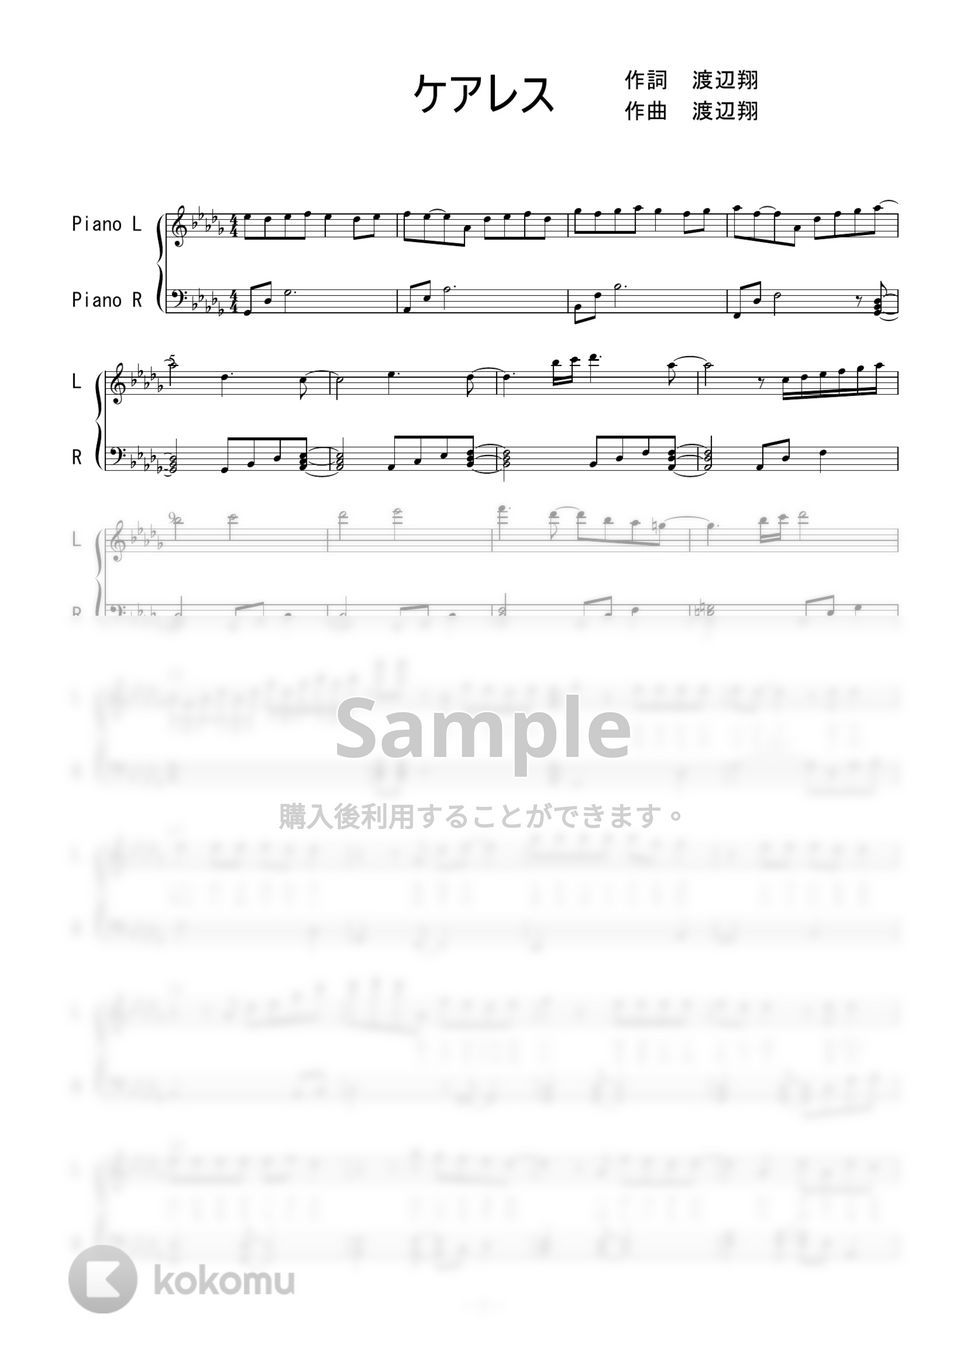 ClariS - ケアレス (ピアノソロ) by 二次元楽譜製作所